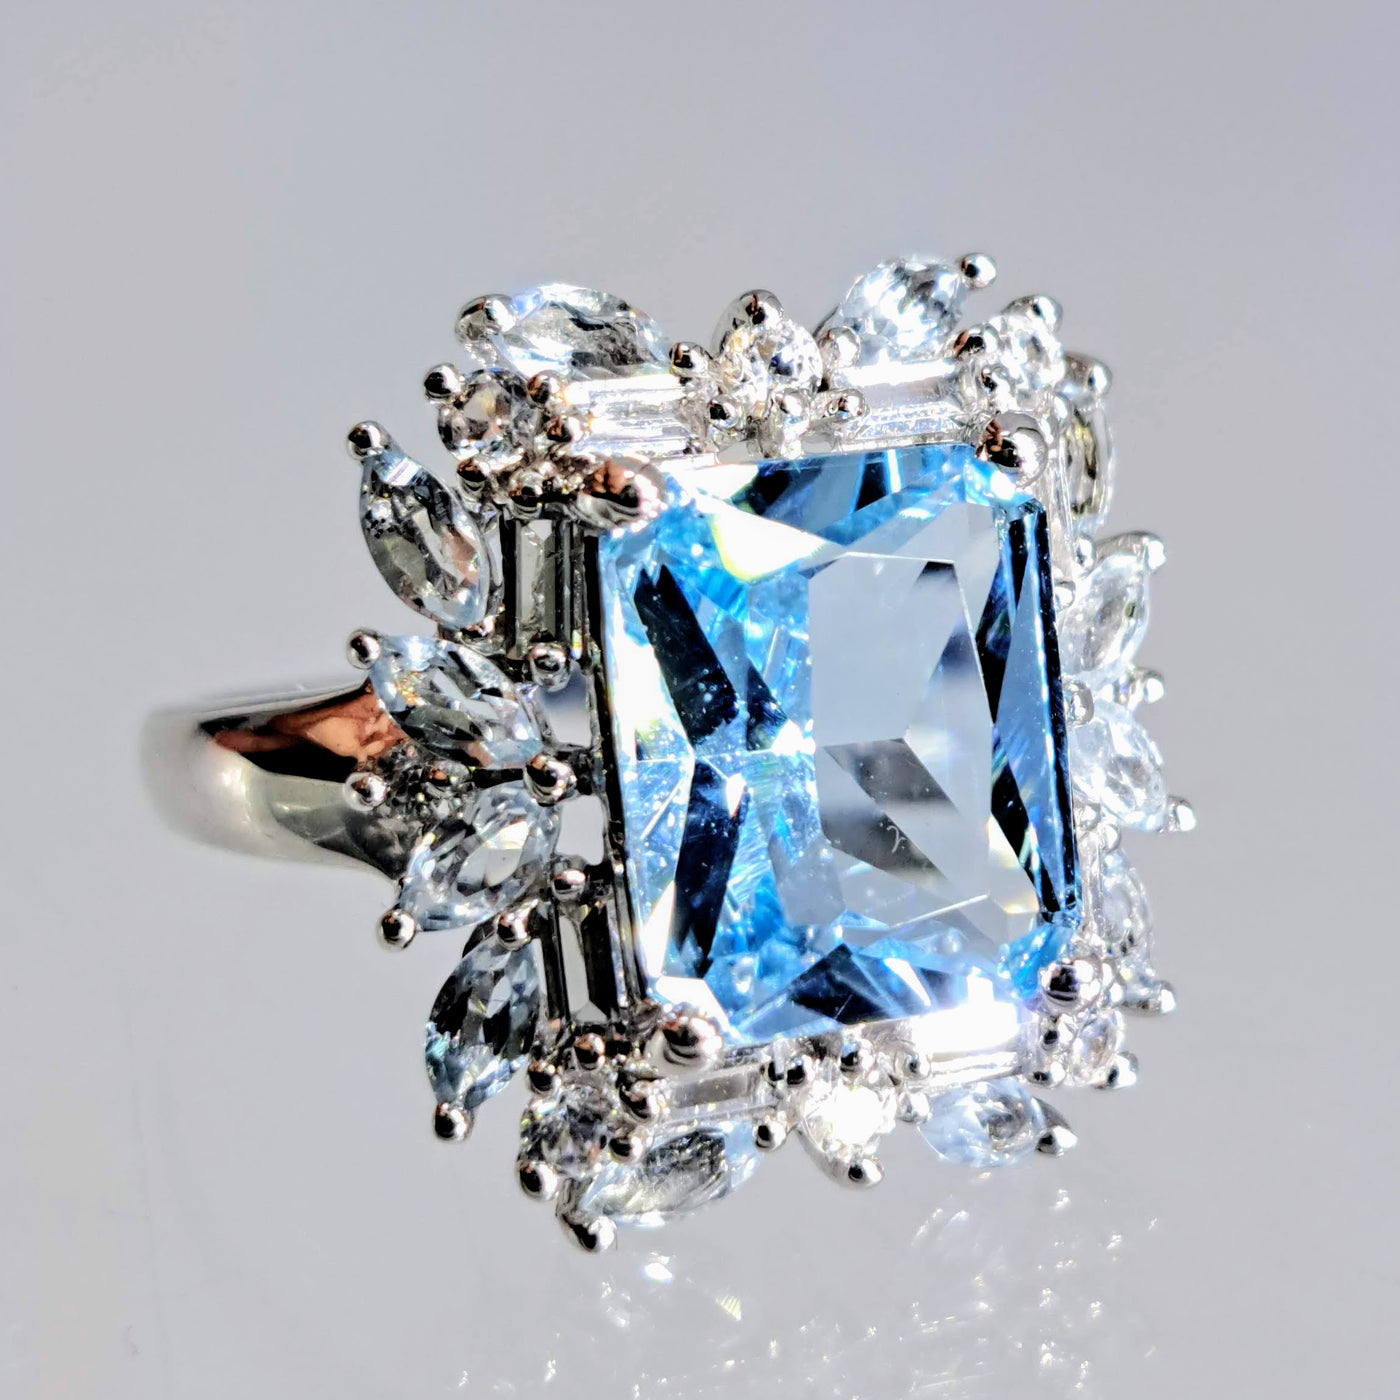 "Sparkle Blue" Sz 7 Ring - Topaz, Aquamarine, Zircon Stone, Anti-tarnish Sterling